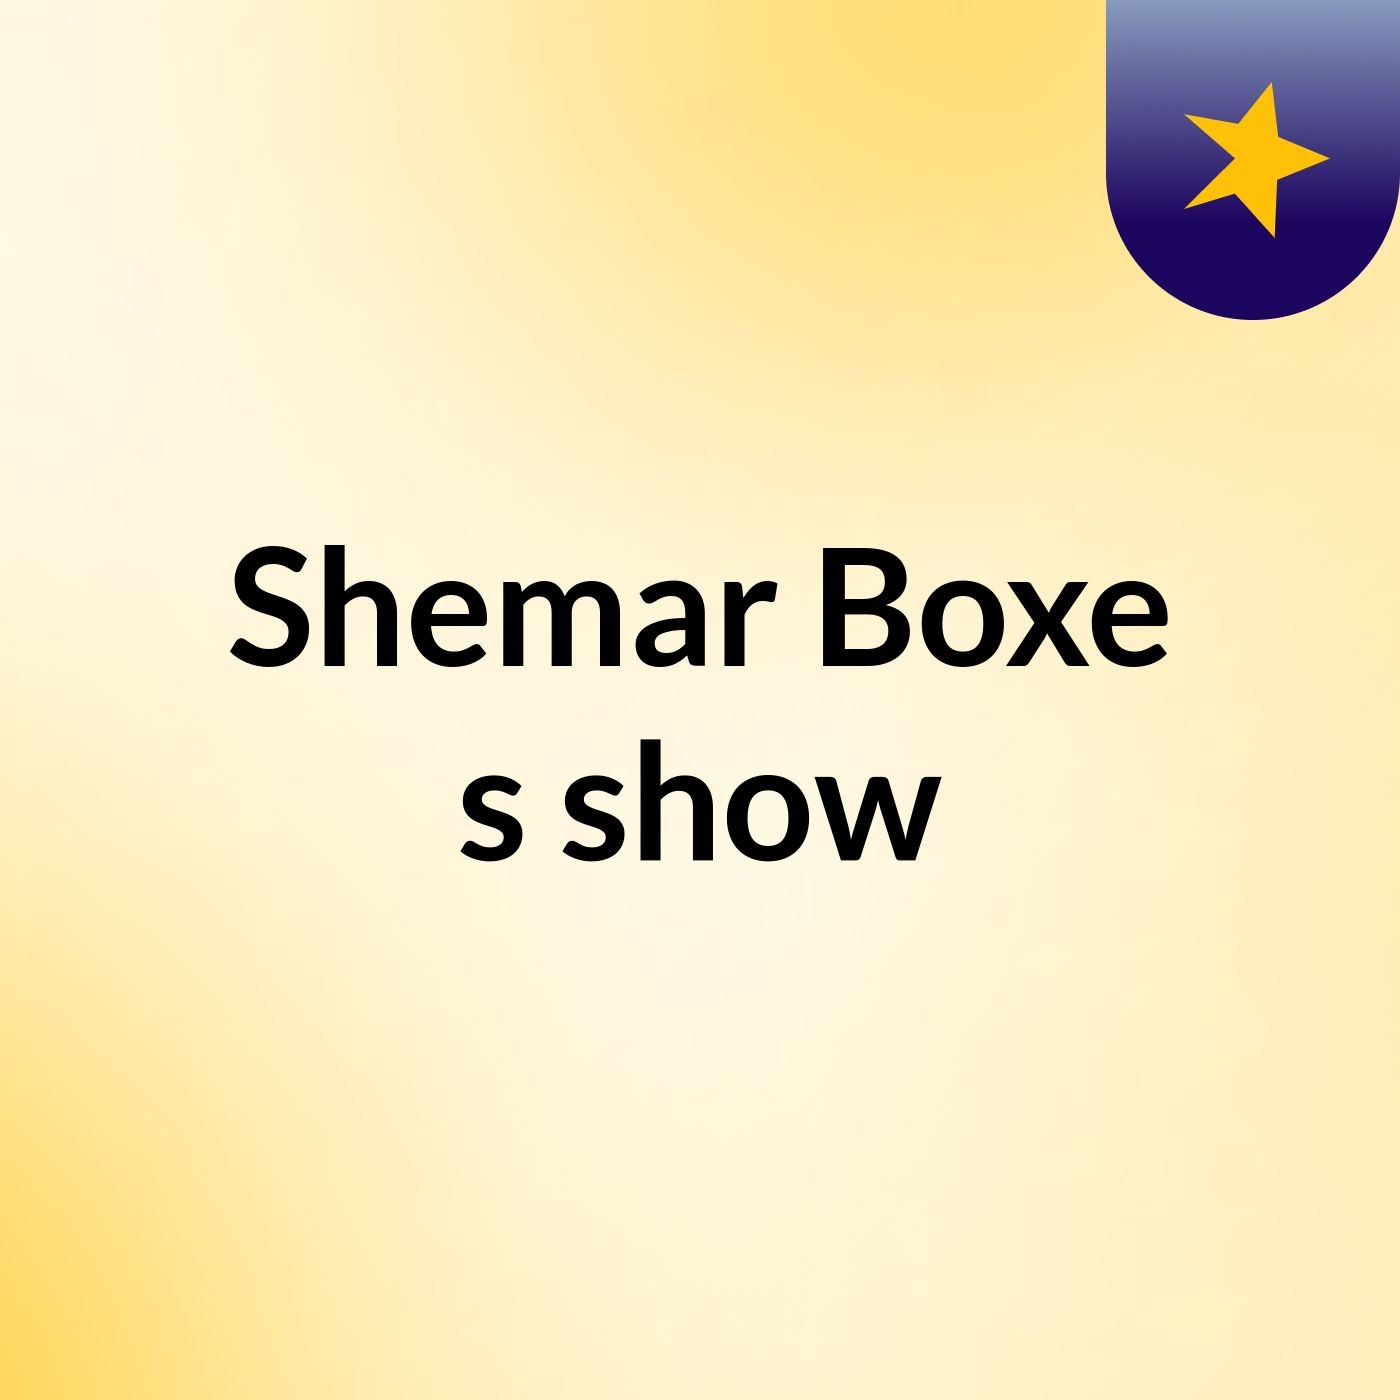 Shemar Boxe's show